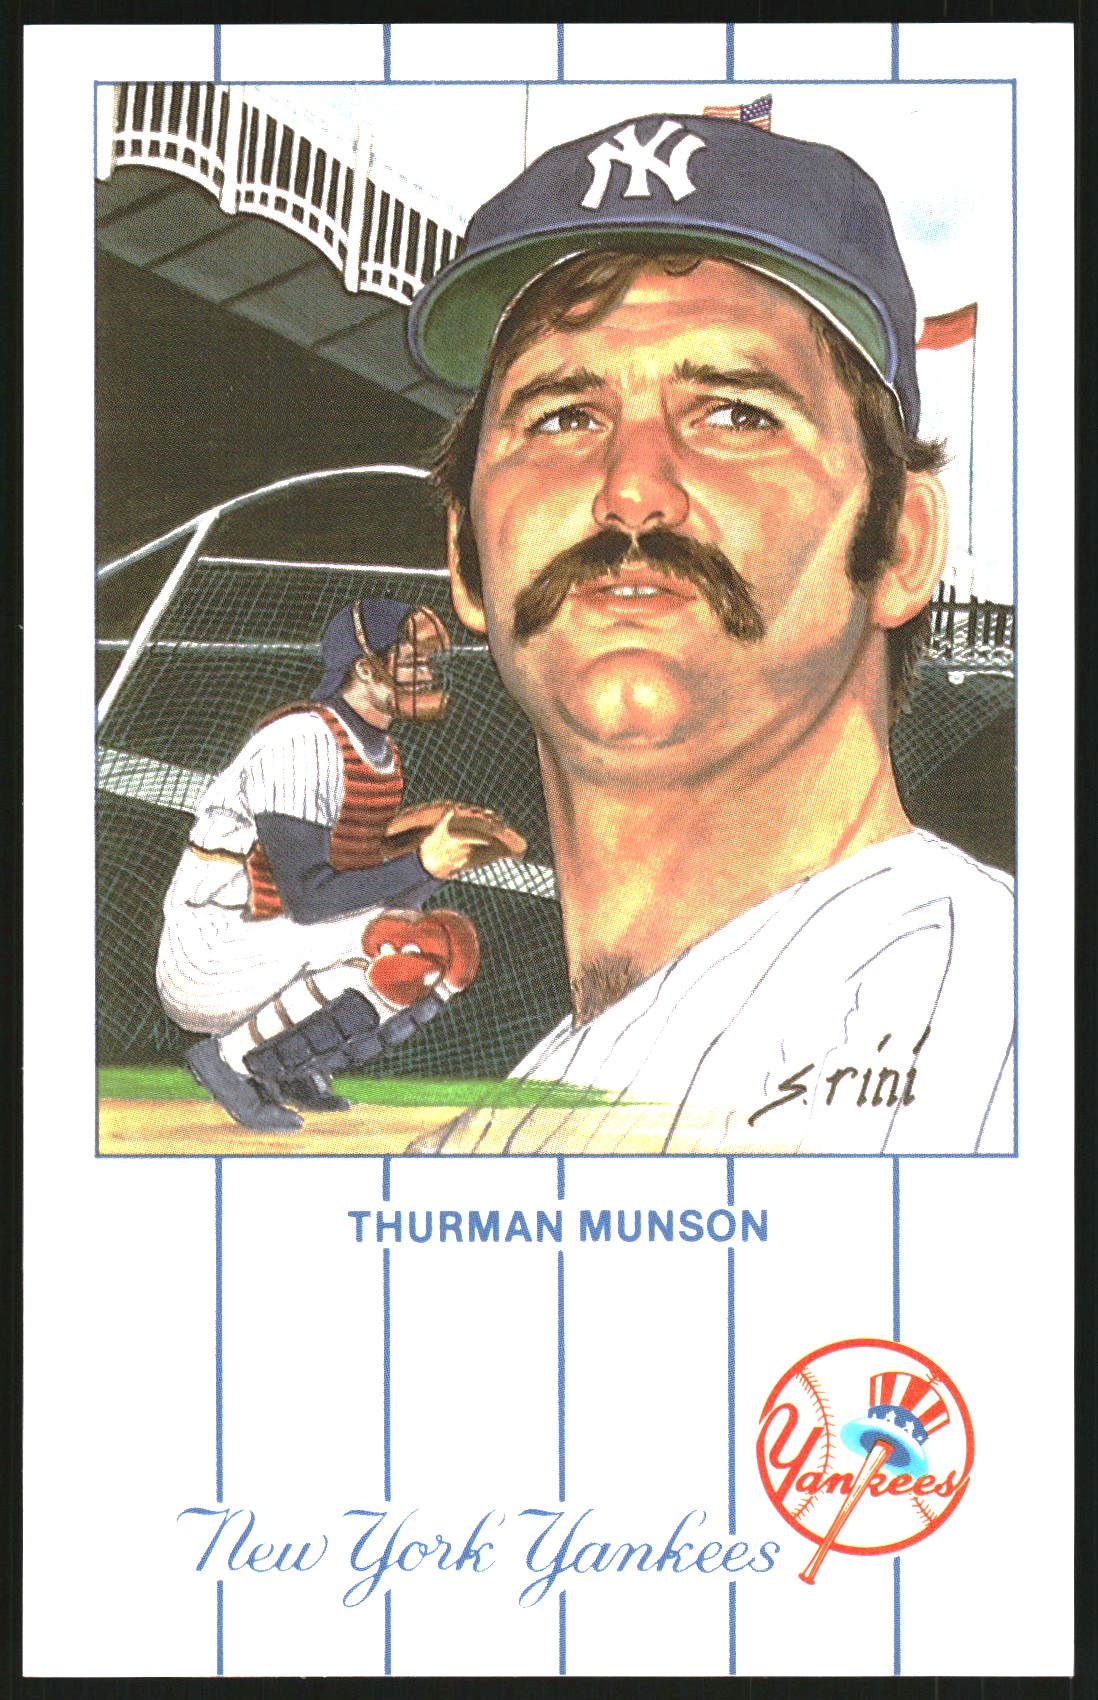 1990 Rini Postcards Munson #11 Thurman Munson/(Waiting for the ball)